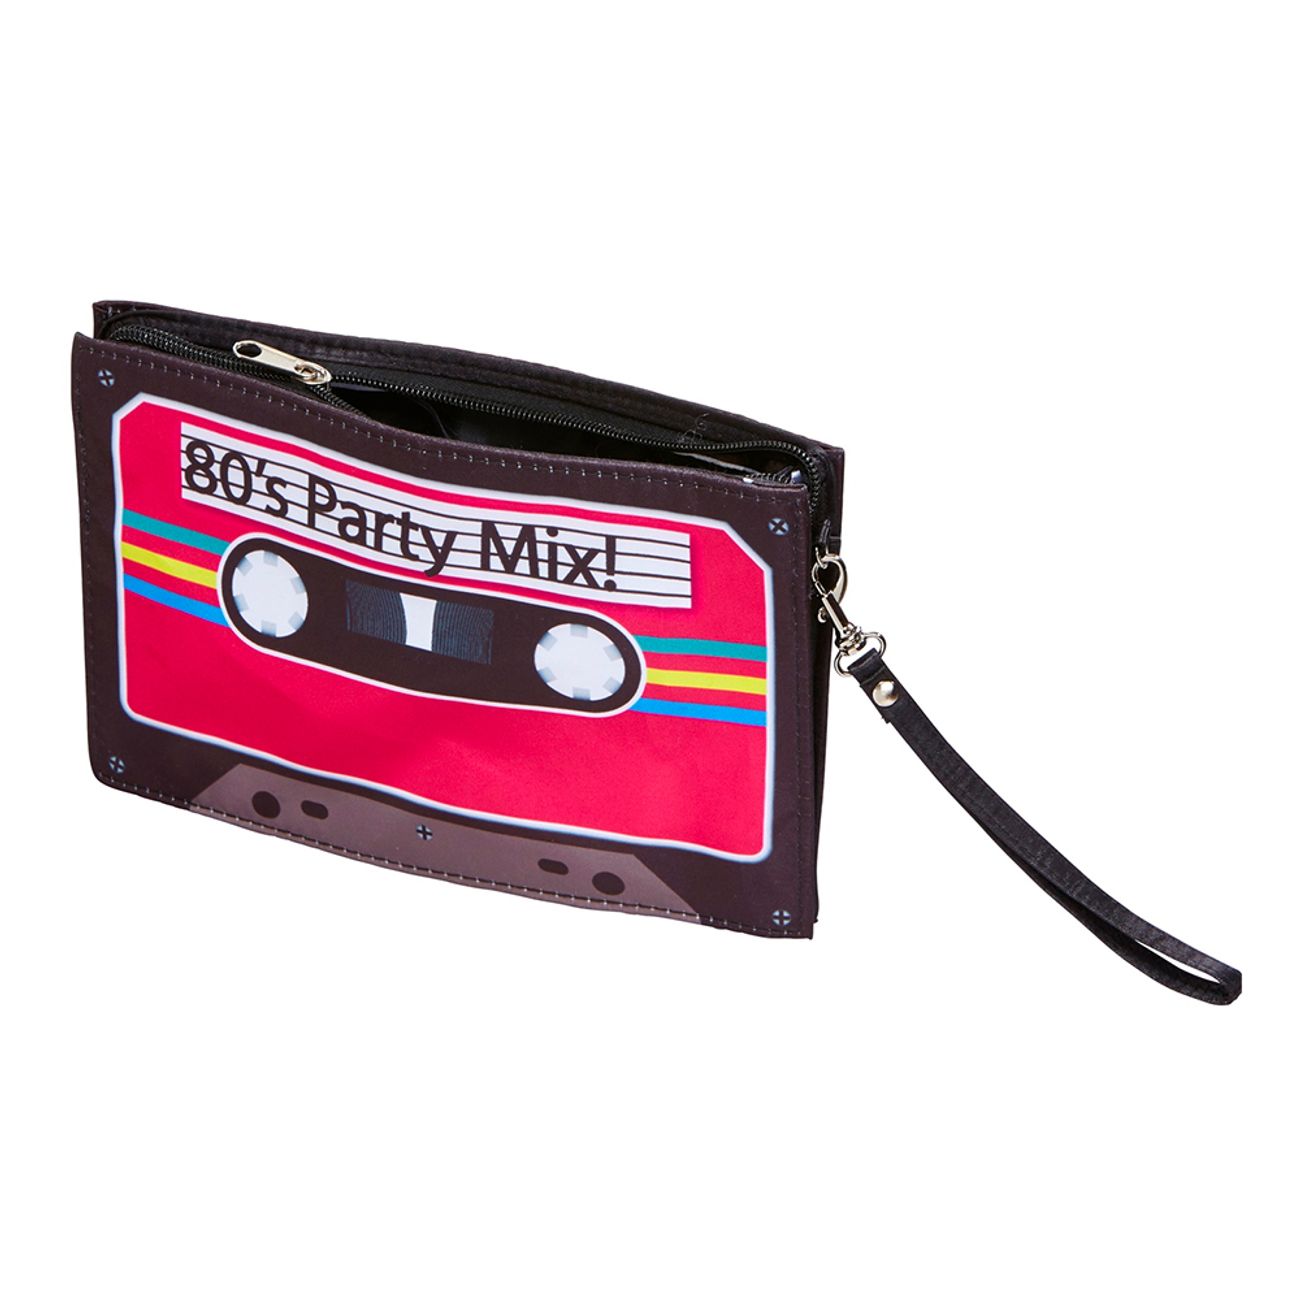 80-tals-handvaska-kassettband-76633-1